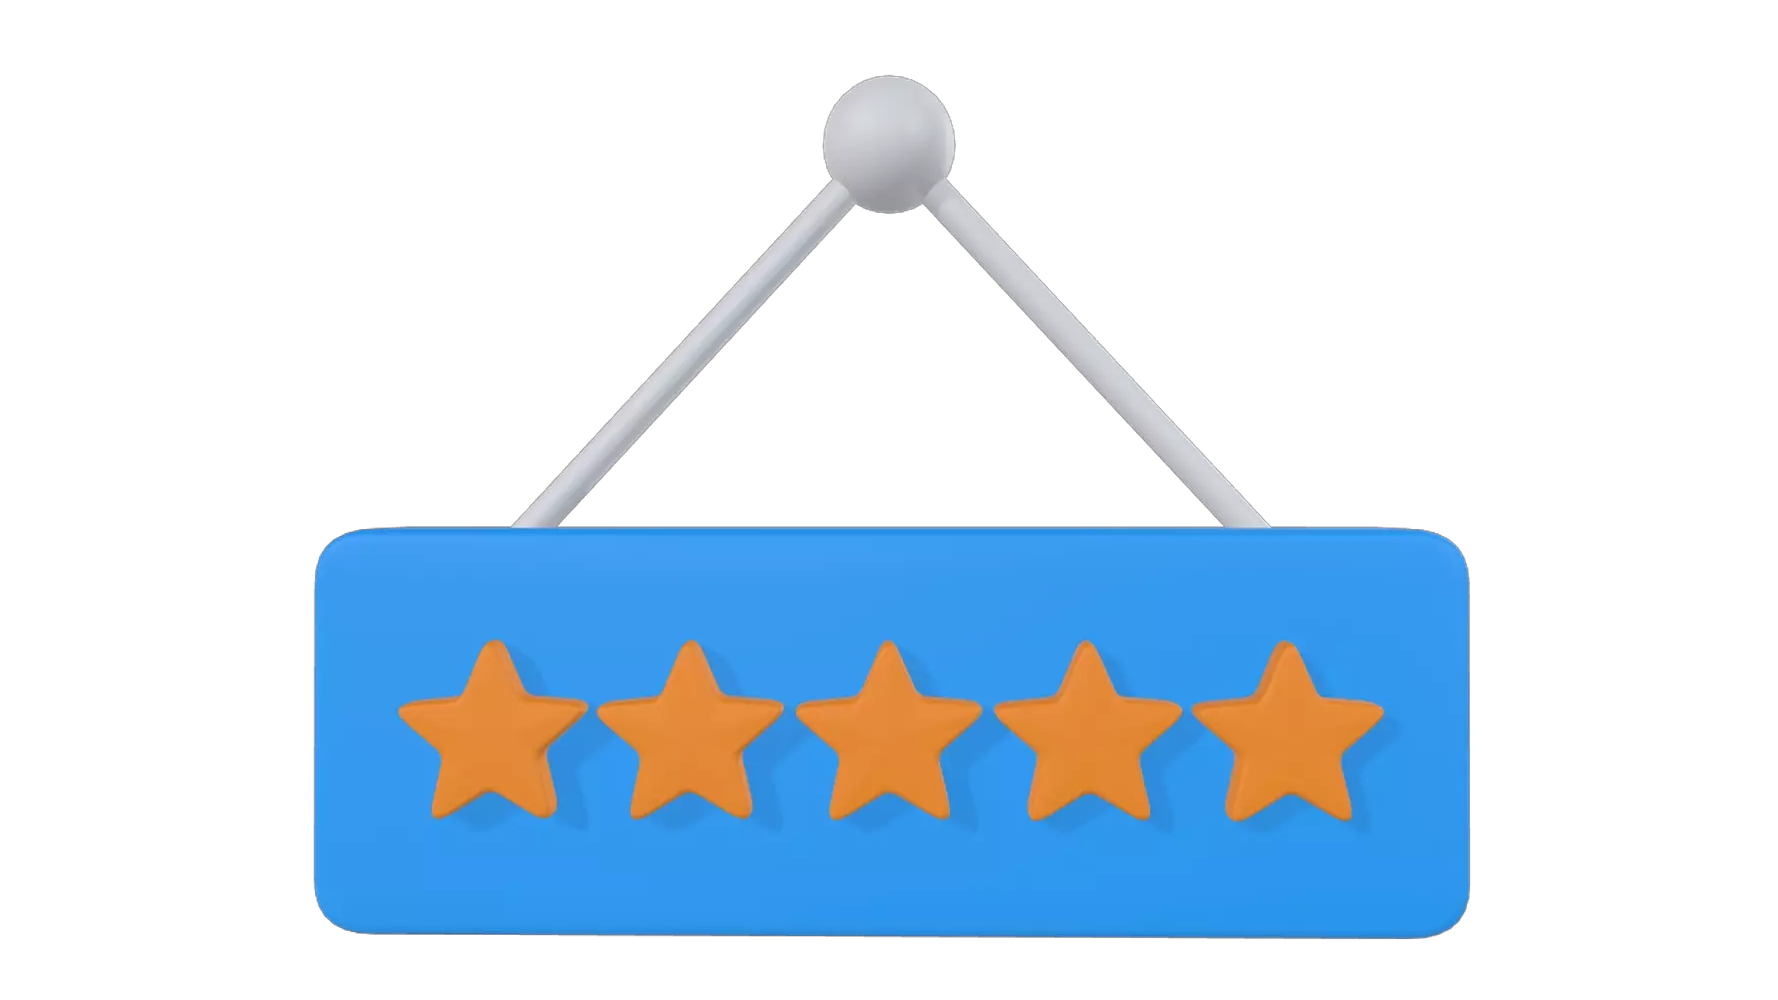 Star Board 3D Graphic